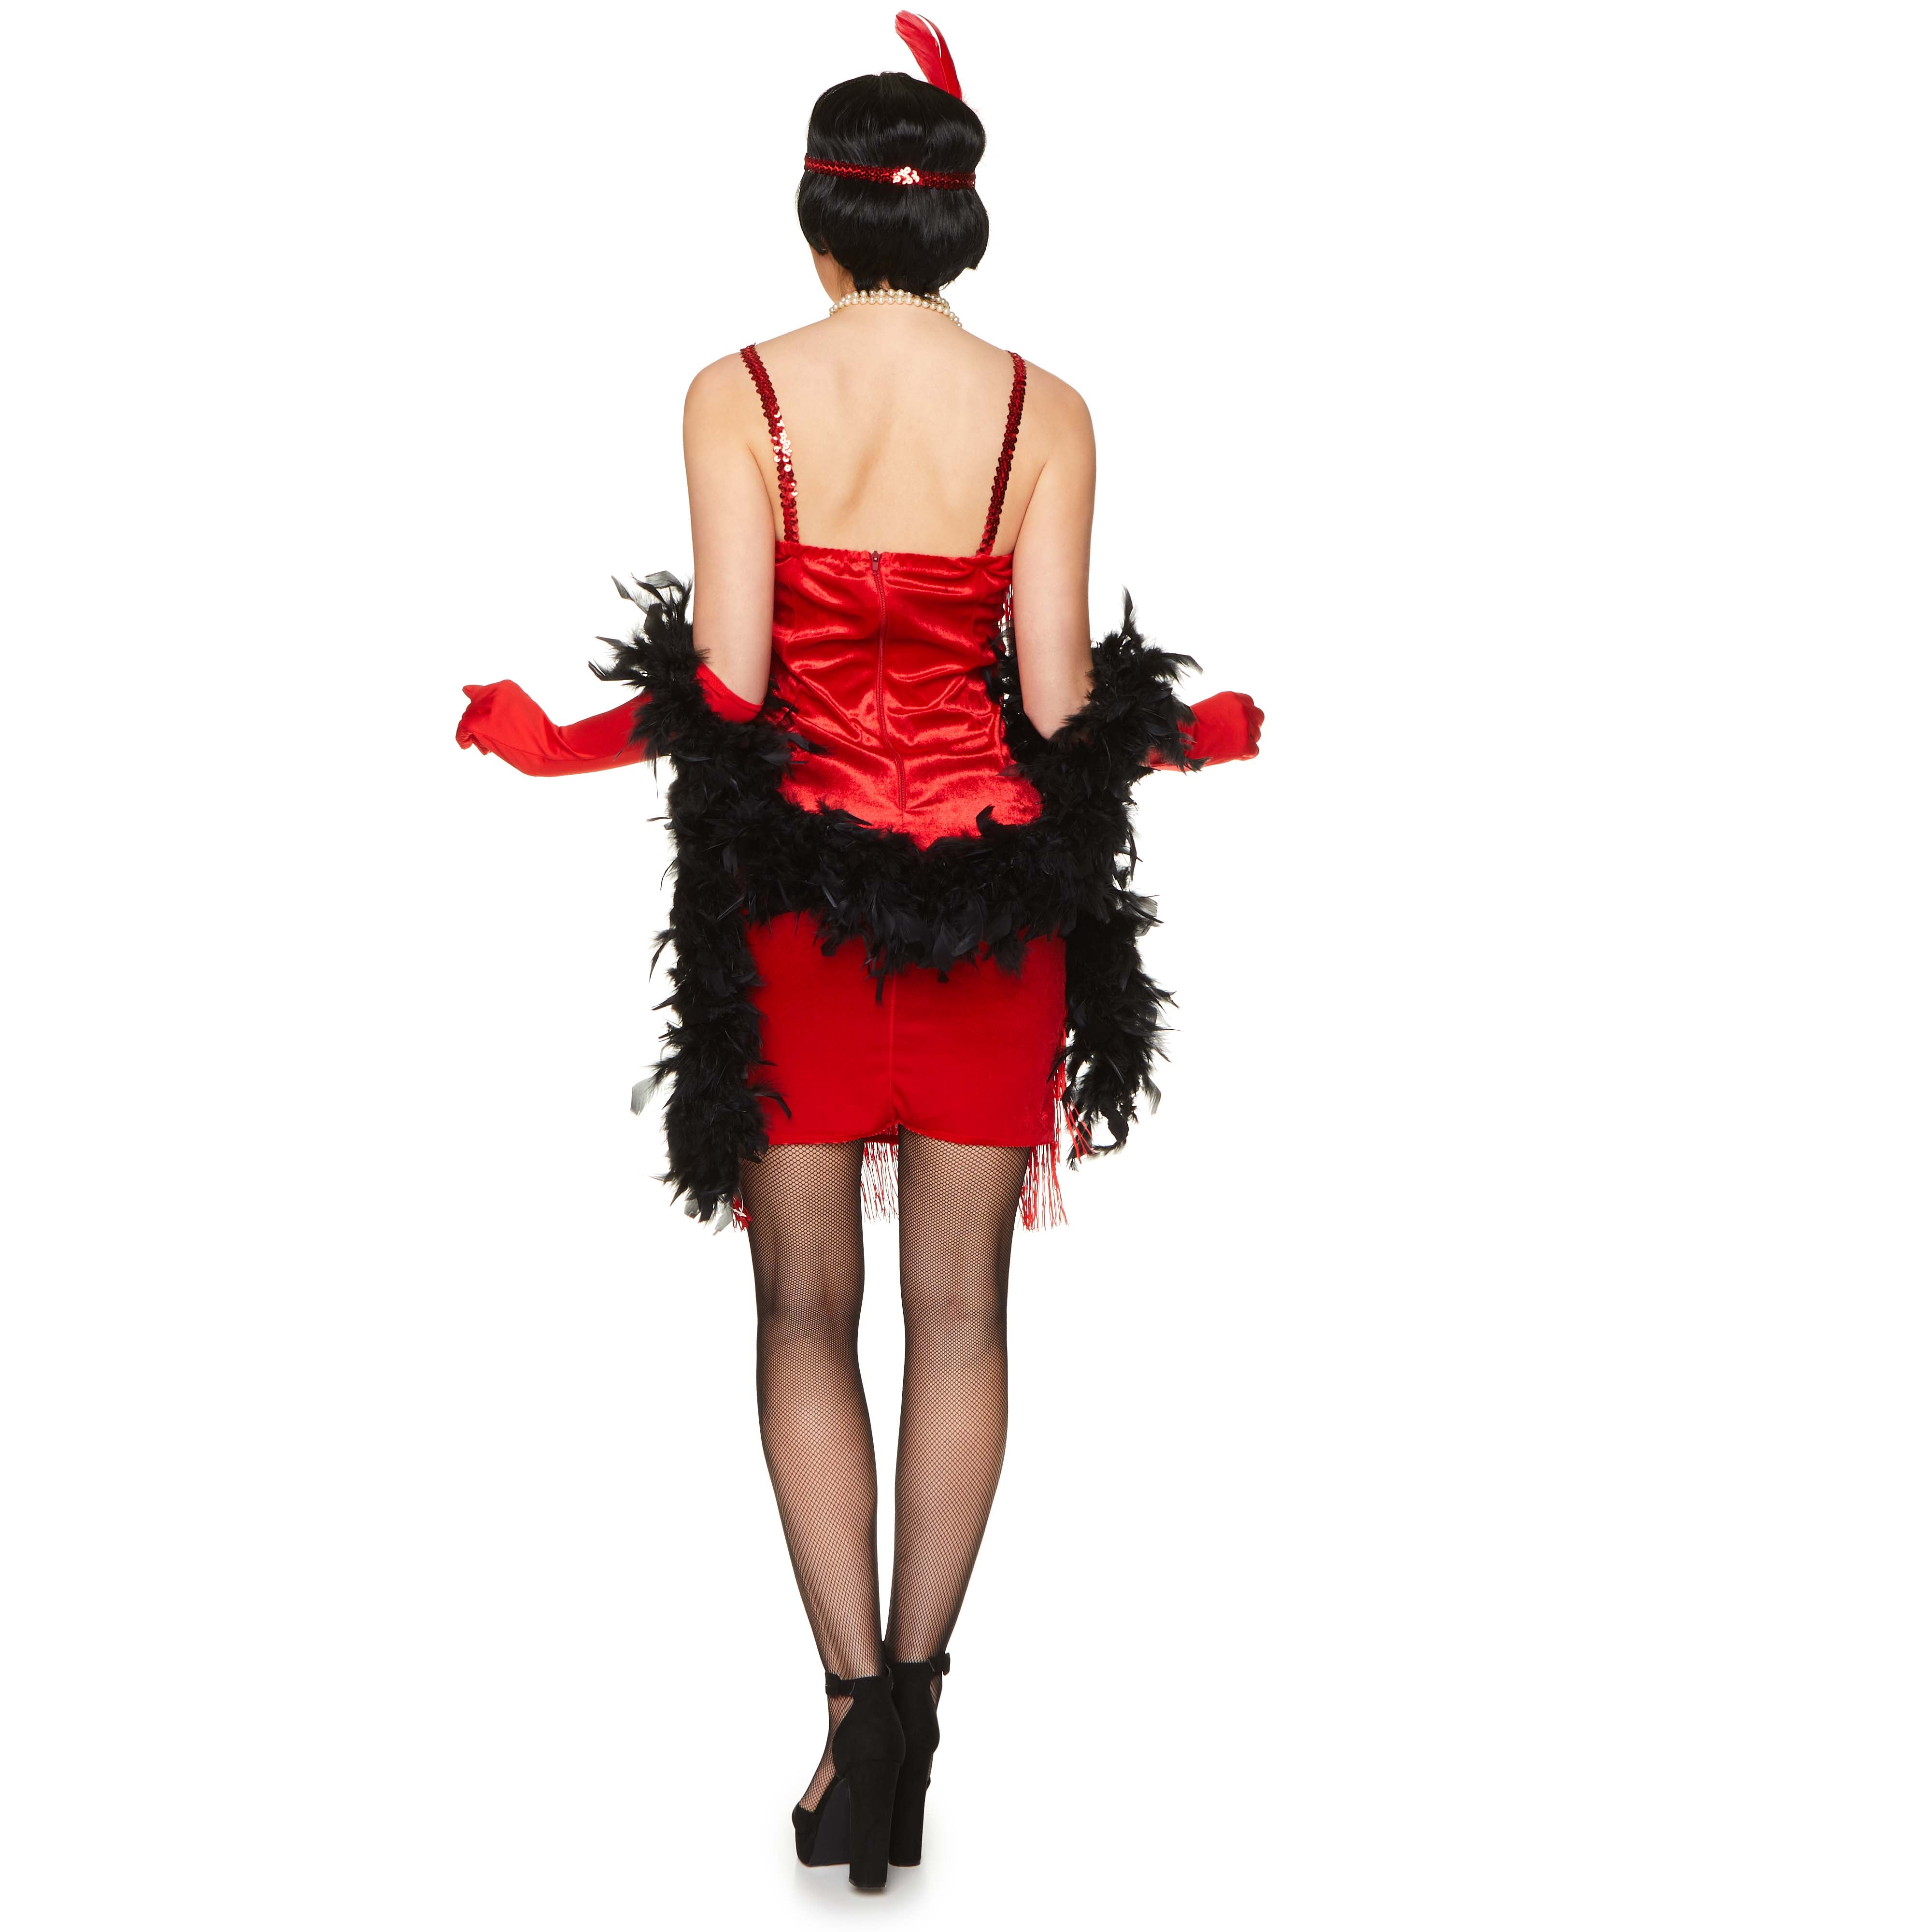 Costume - Red Flapper Dress Adult